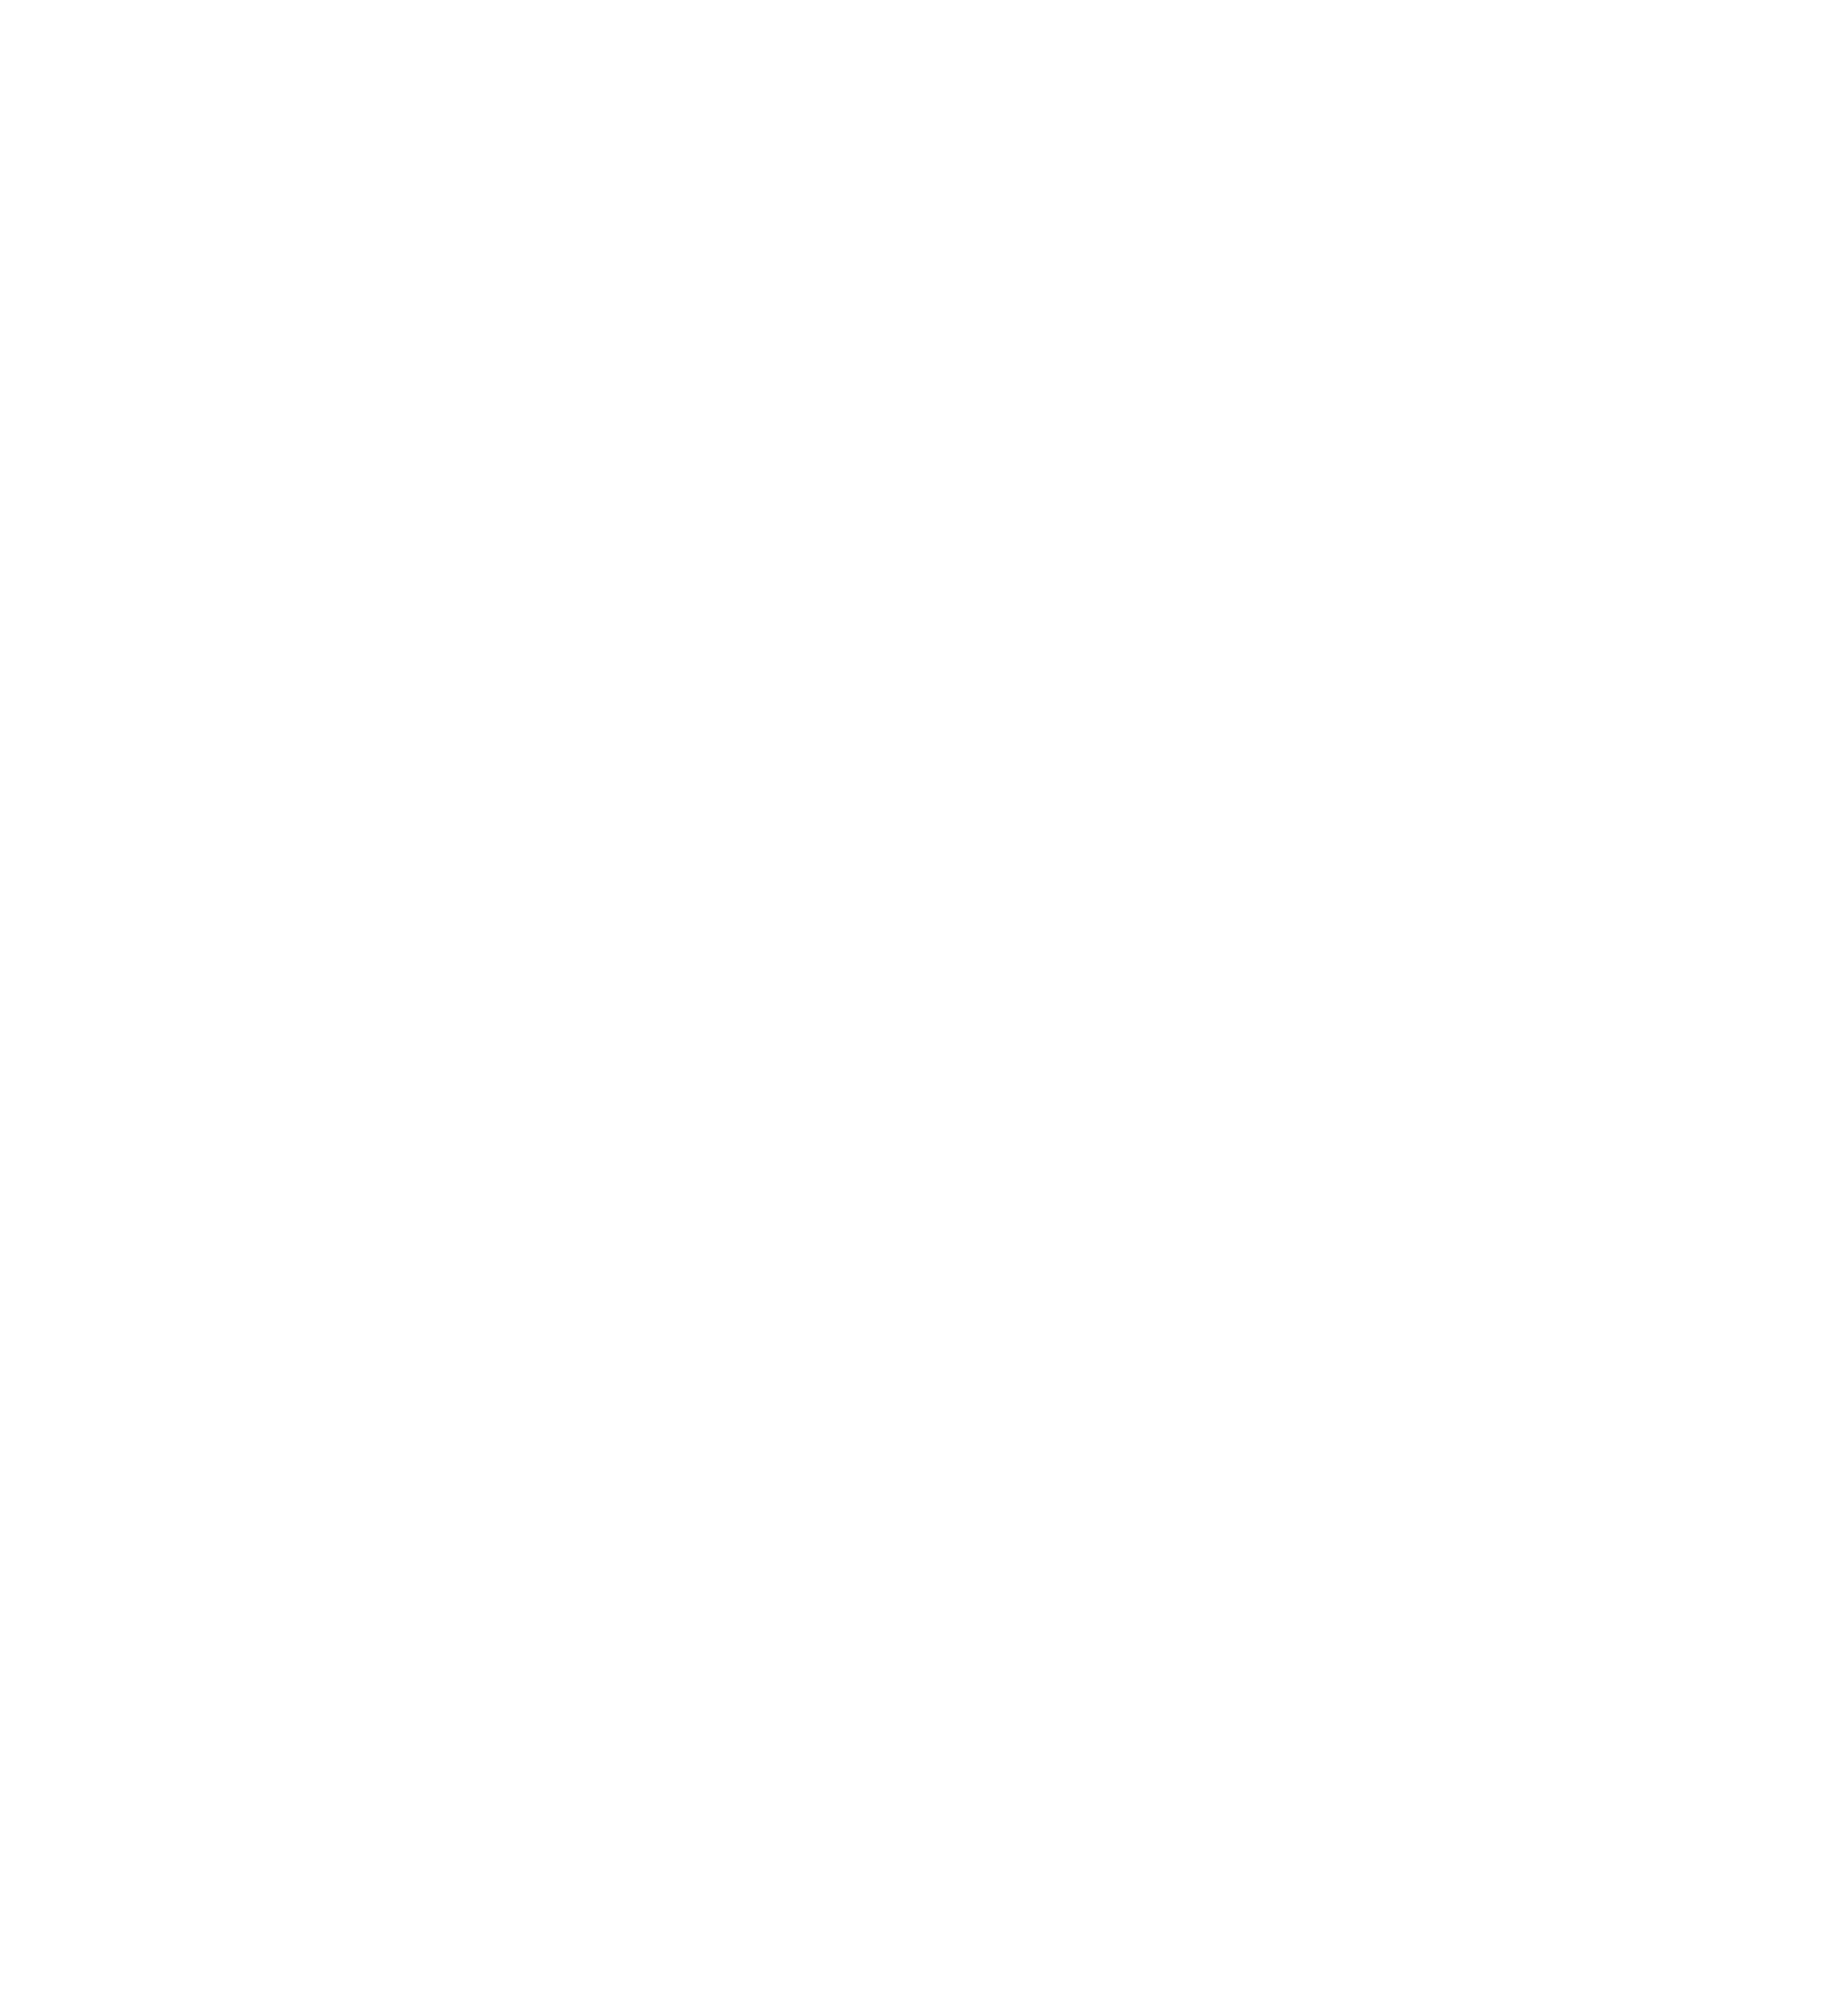 RIGHT SIDE POLYURETHANE:100%